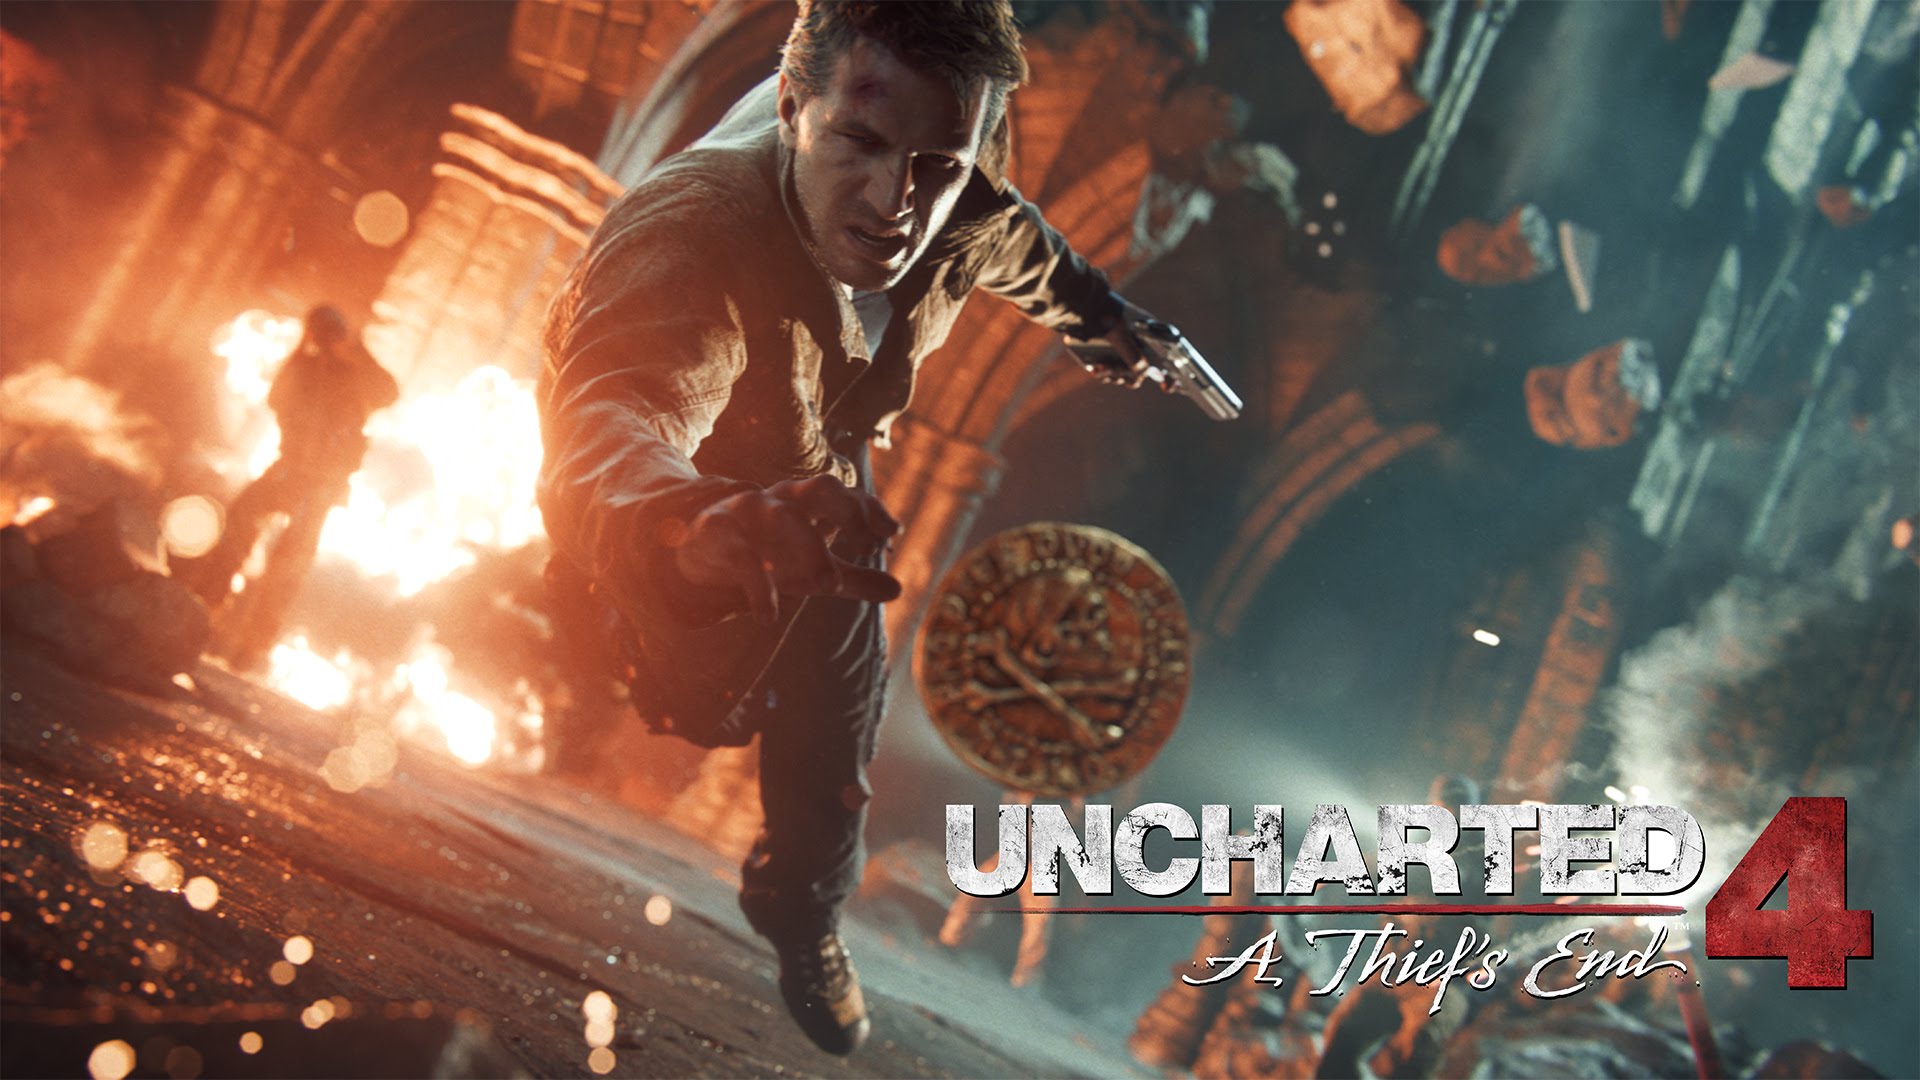 Uncharted 4 A Thief’s End gana otro premio mas-frikigamers.com